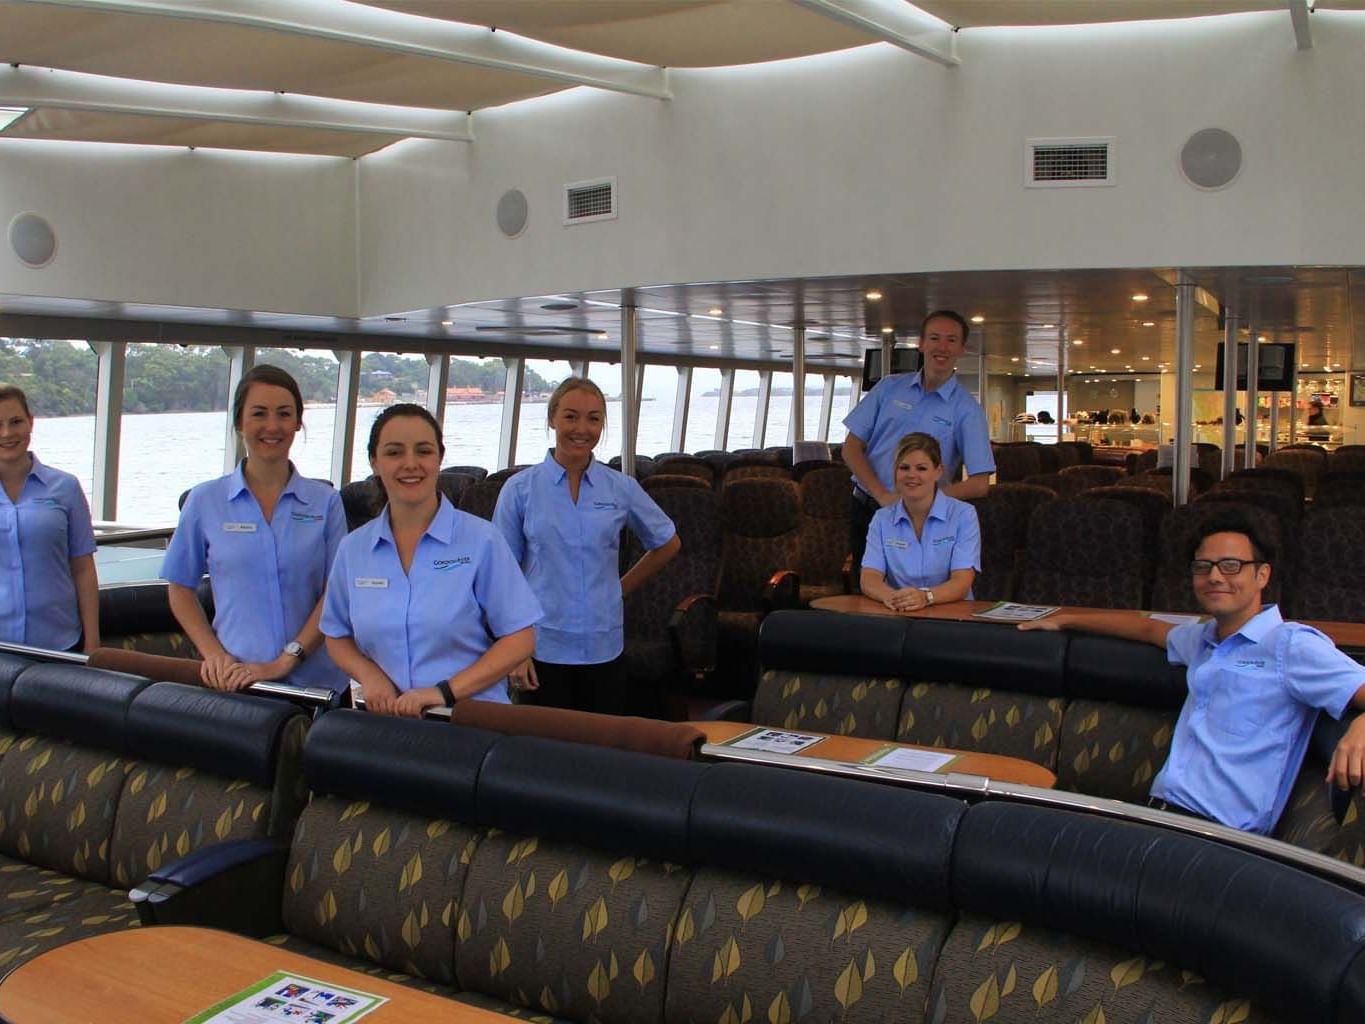 Cruise ship staff at the Gordon River Cruise